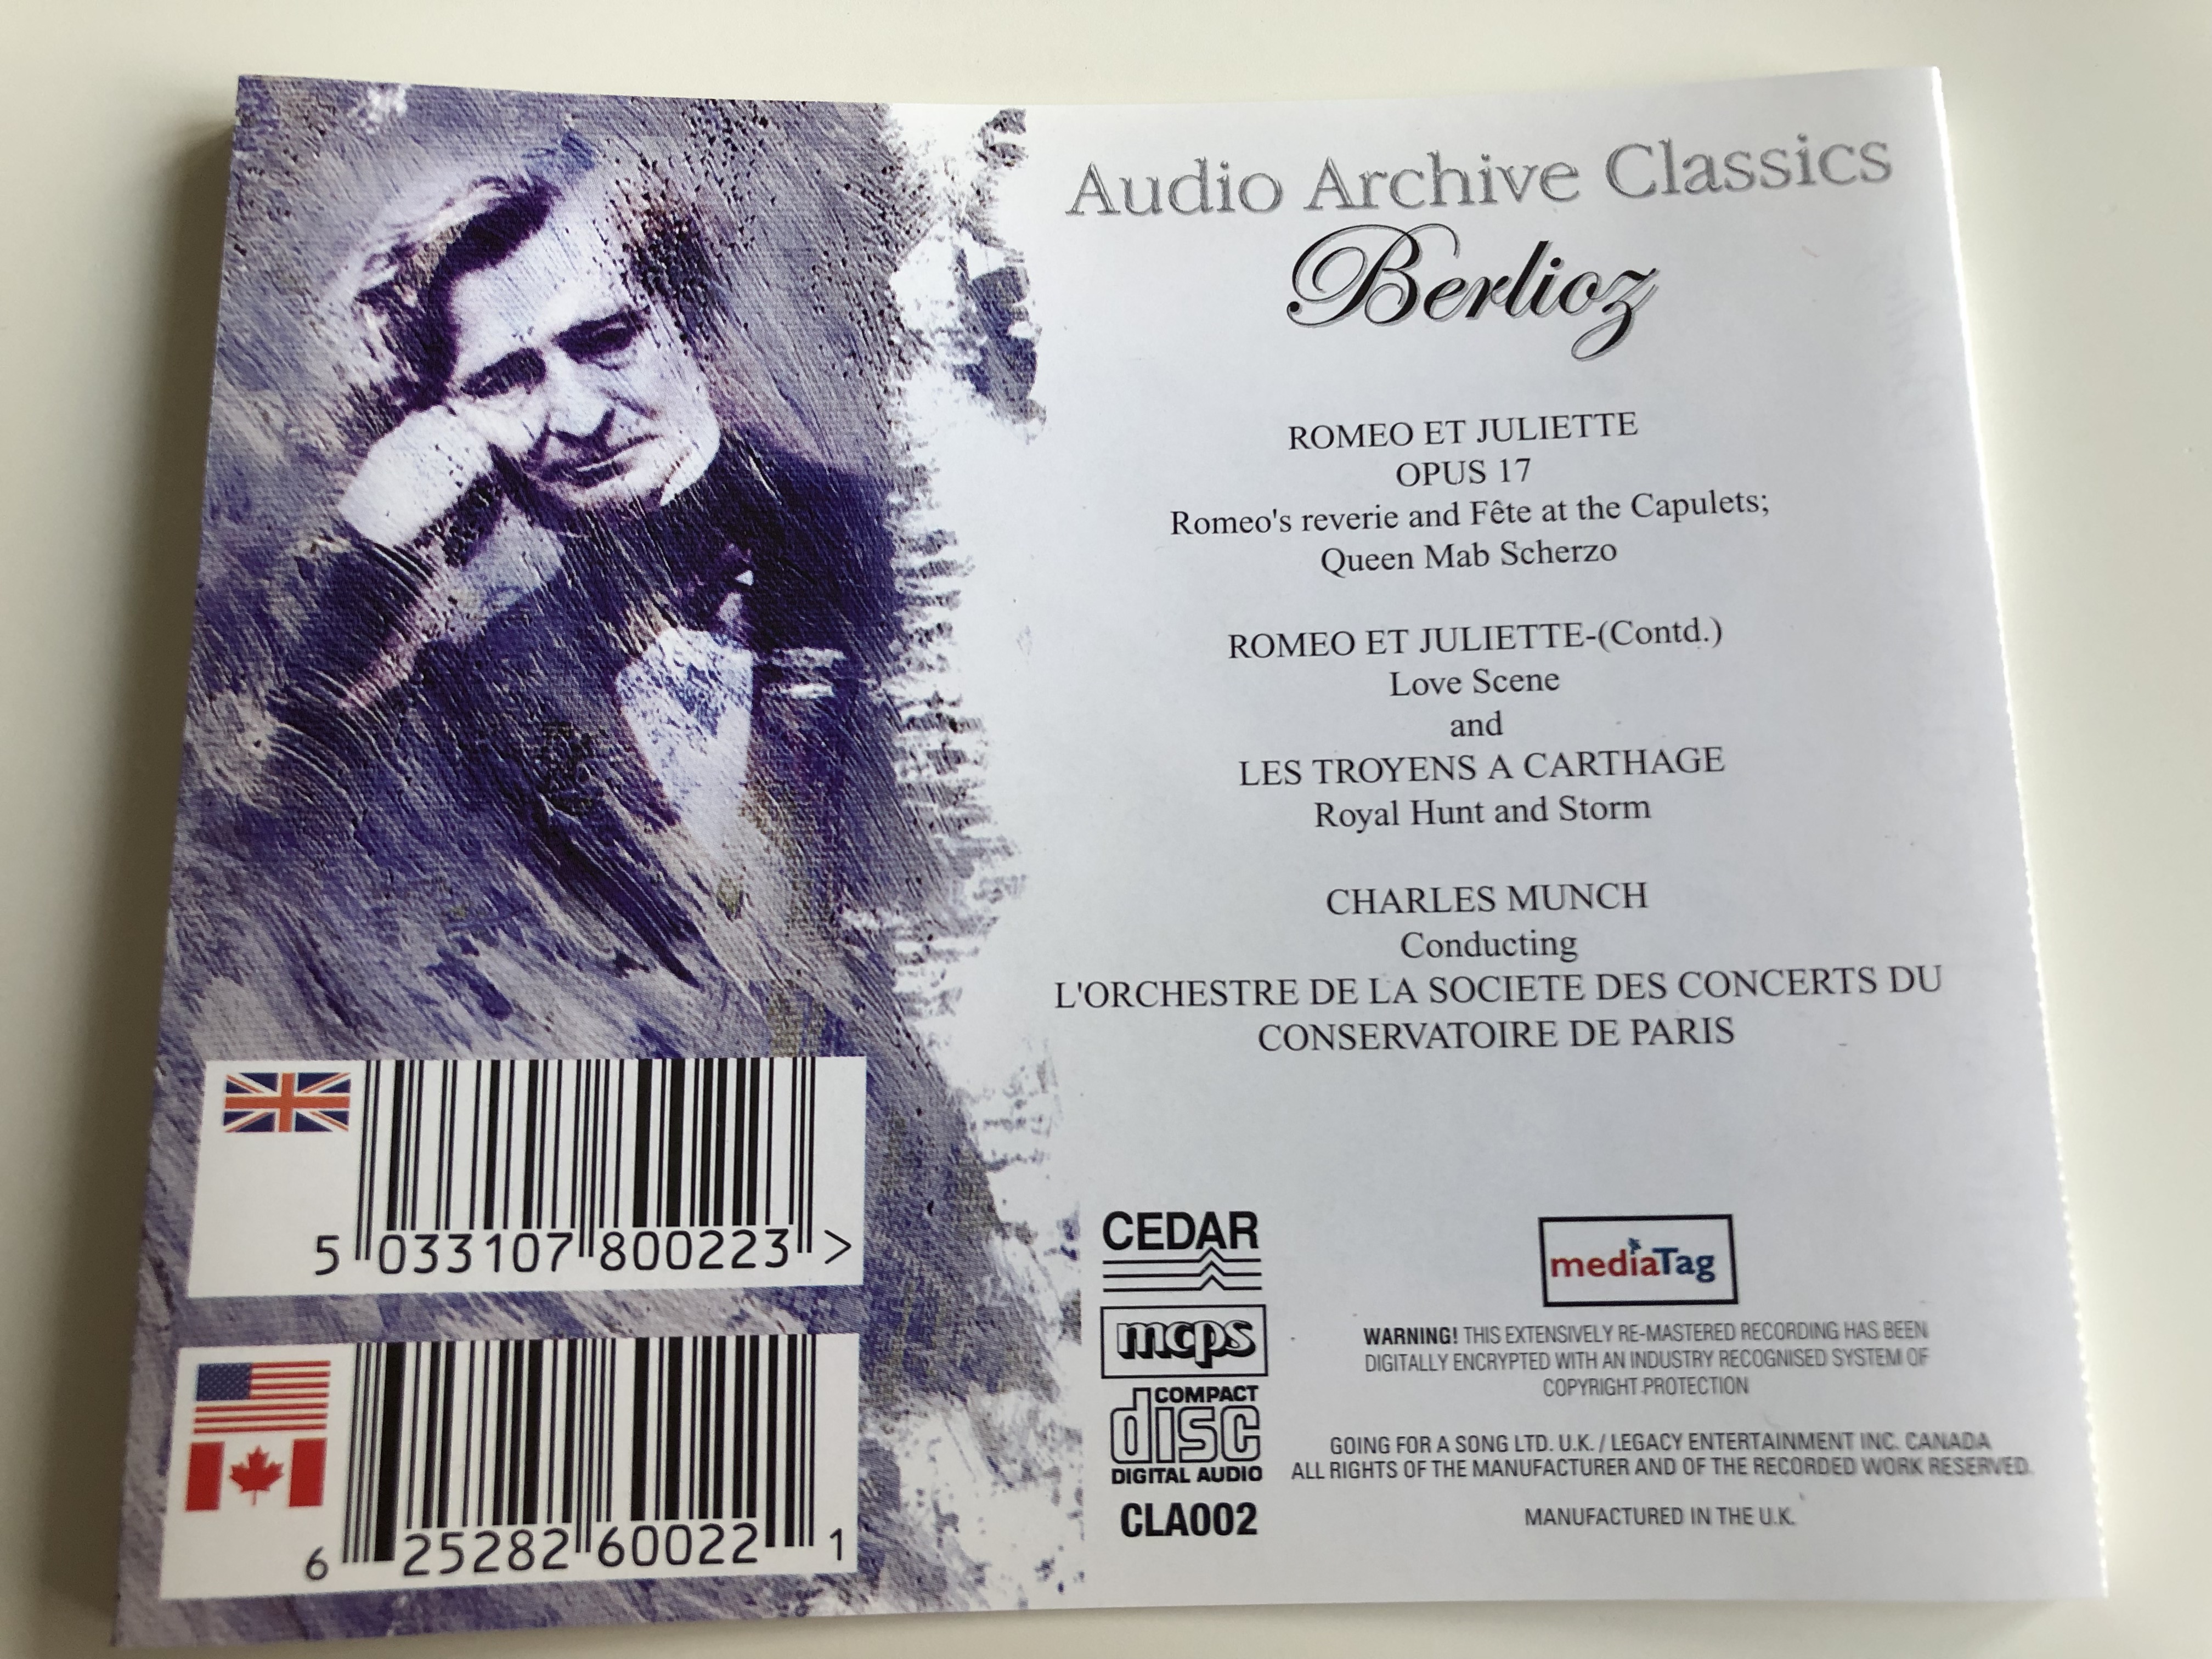 berlioz-audio-archive-classicsimg-4039.jpg